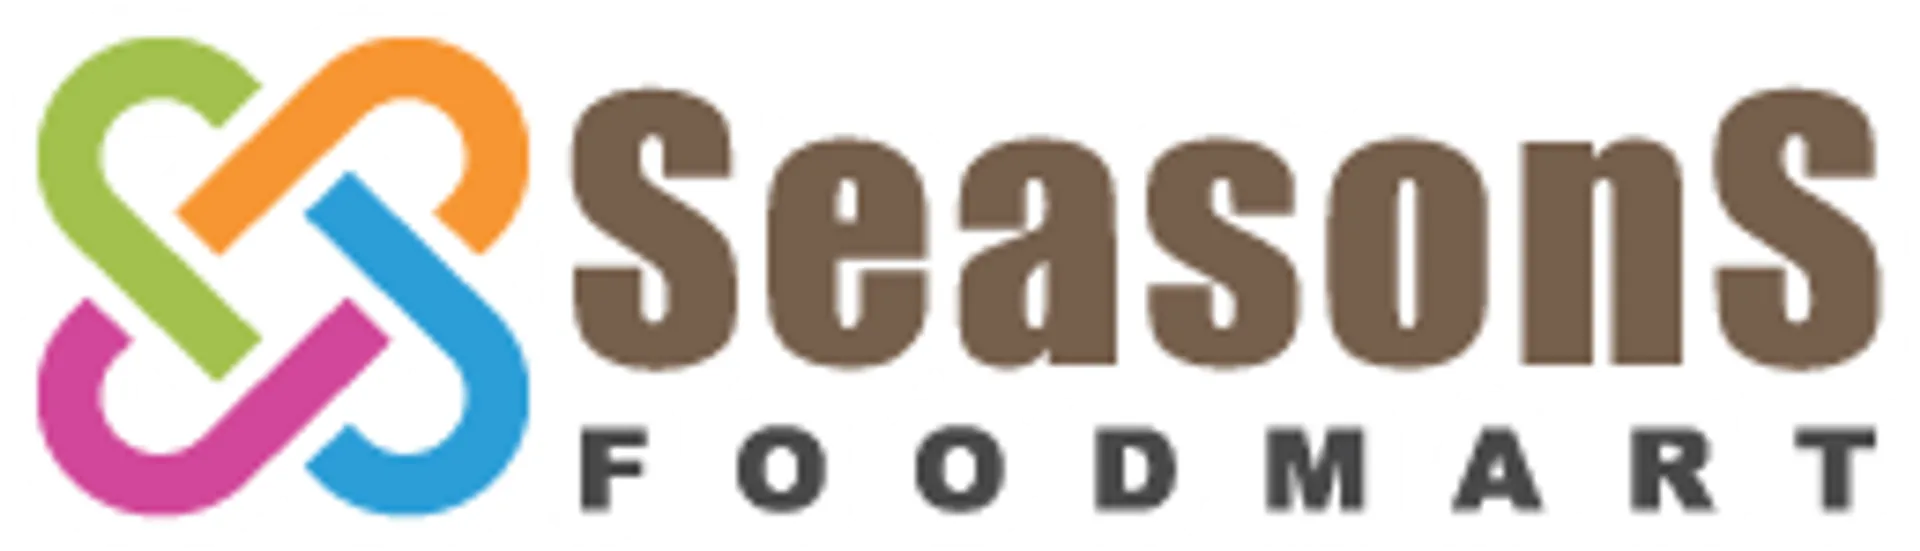 SEASONS FOODMART logo